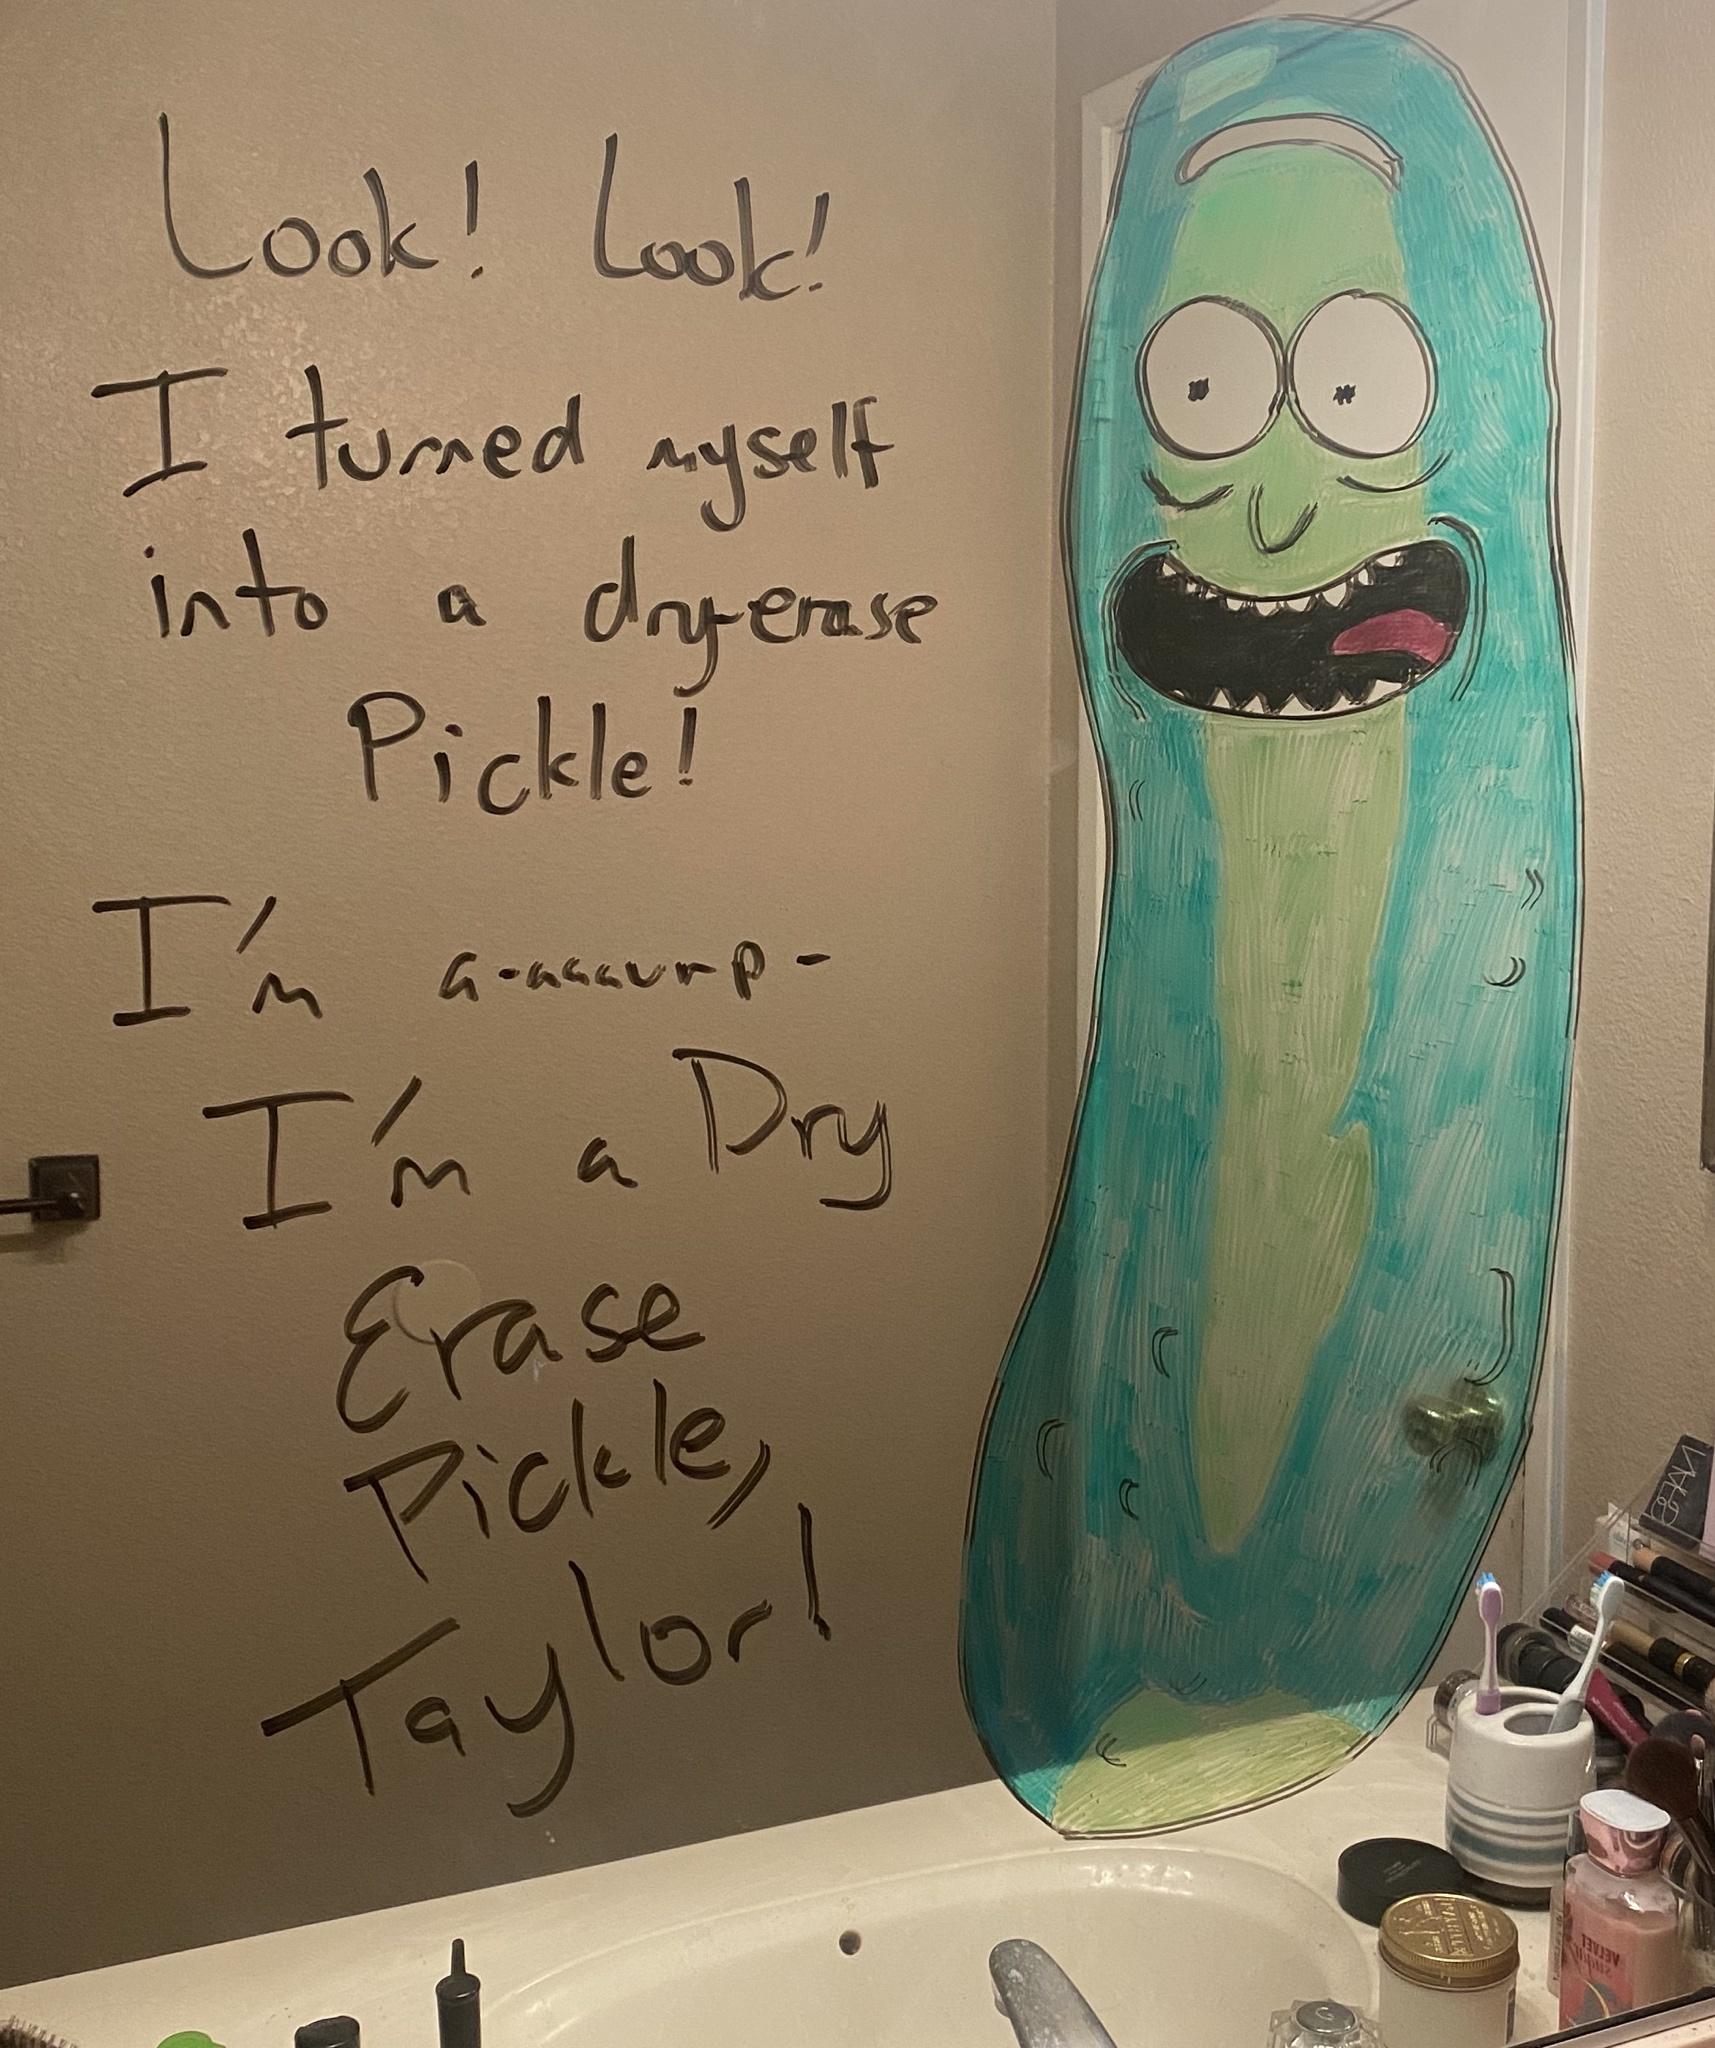 art - Look! Look! I turned myself into dryerase Pickle! I'm I'm a Dry Goncaurp Erase Pickle, Taylor! Buen